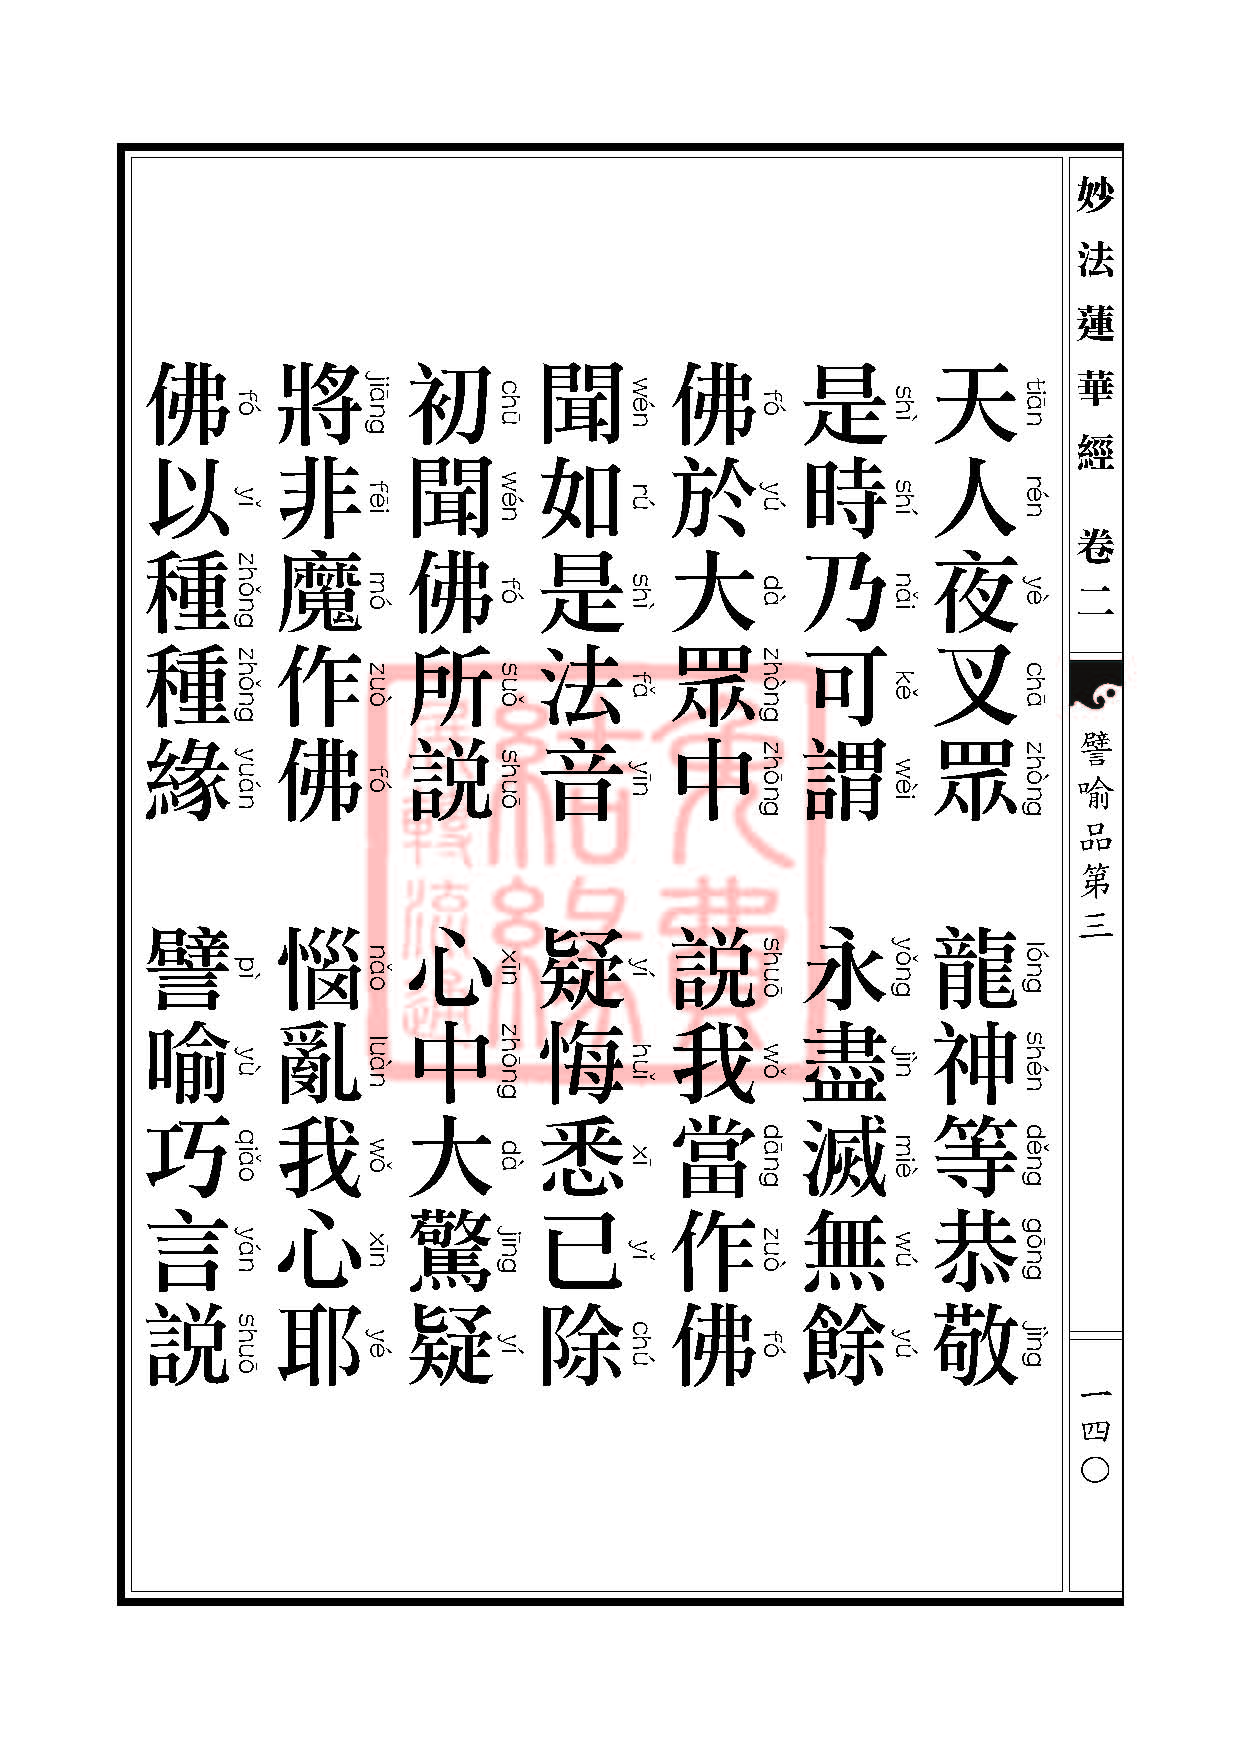 Book_FHJ_HK-A6-PY_Web_ҳ_140.jpg